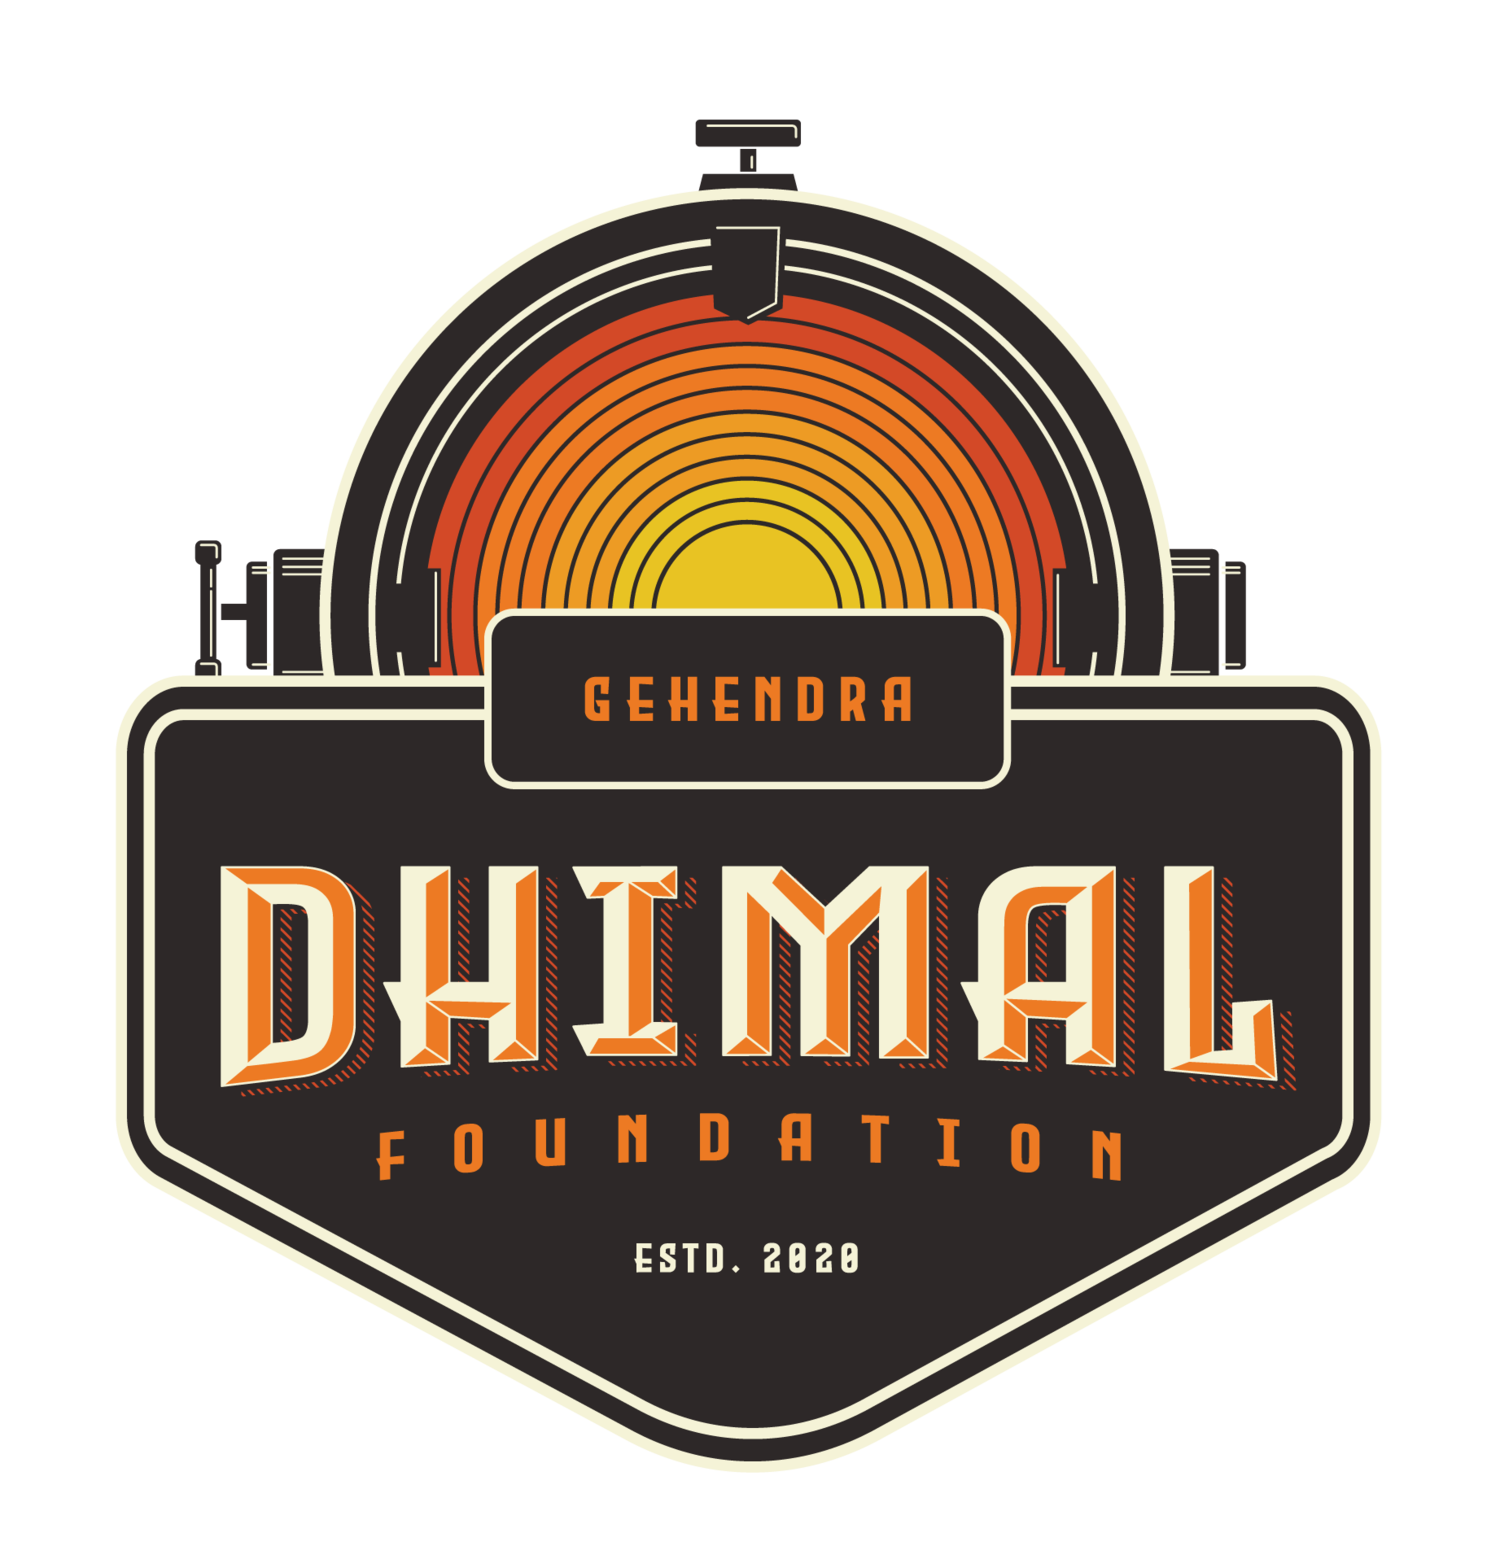 Gehendra Dhimal Foundation